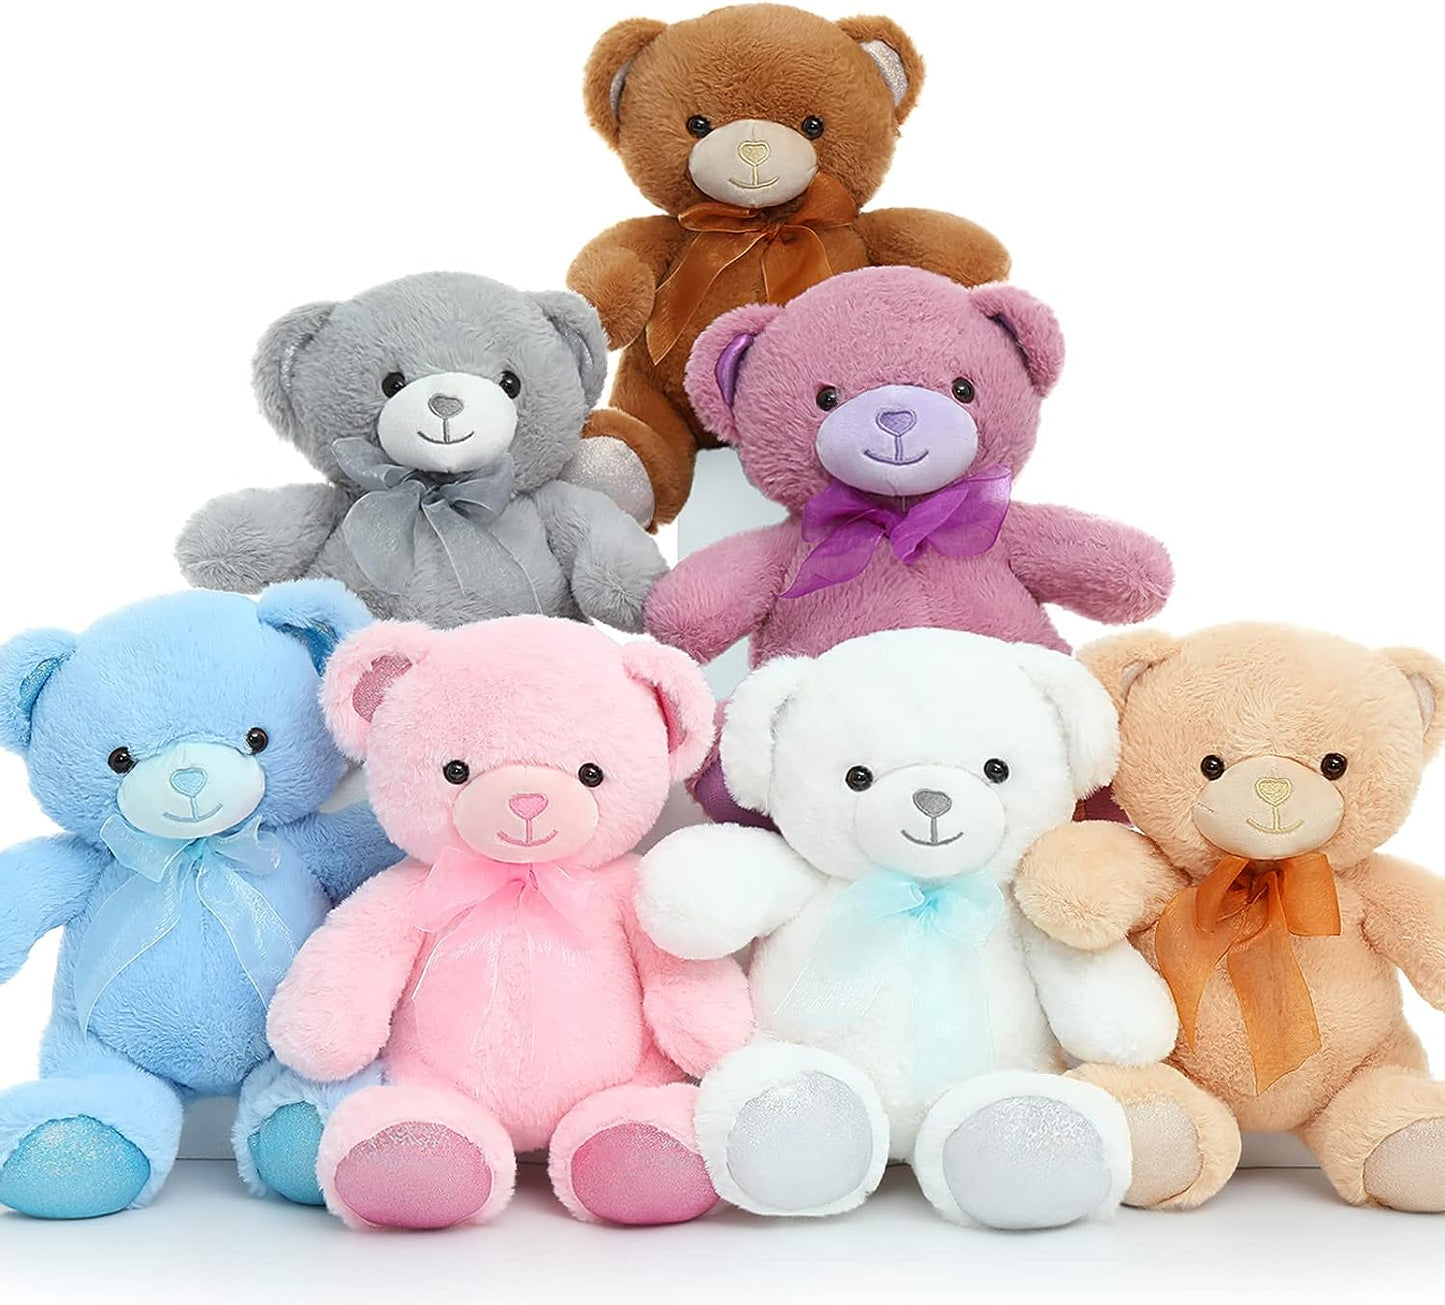 7 Piece Teddy Bear Plush Toy Set, Multicolor, 14 Inches - MorisMos Stuffed Animals